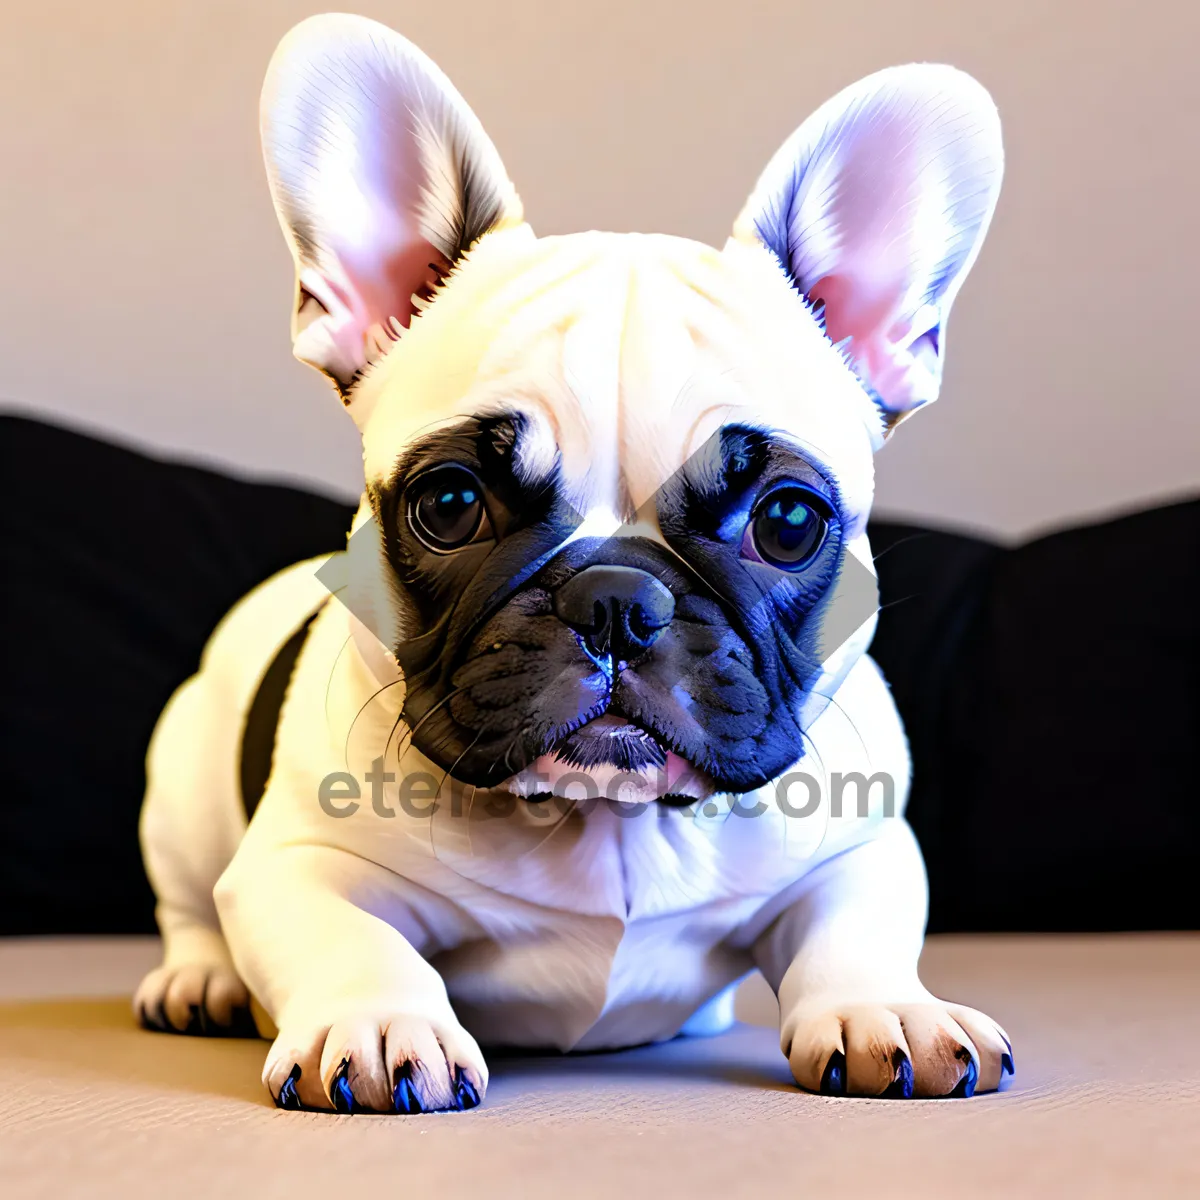 Picture of Playful Purebred Bulldog Puppy in Studio Portraits